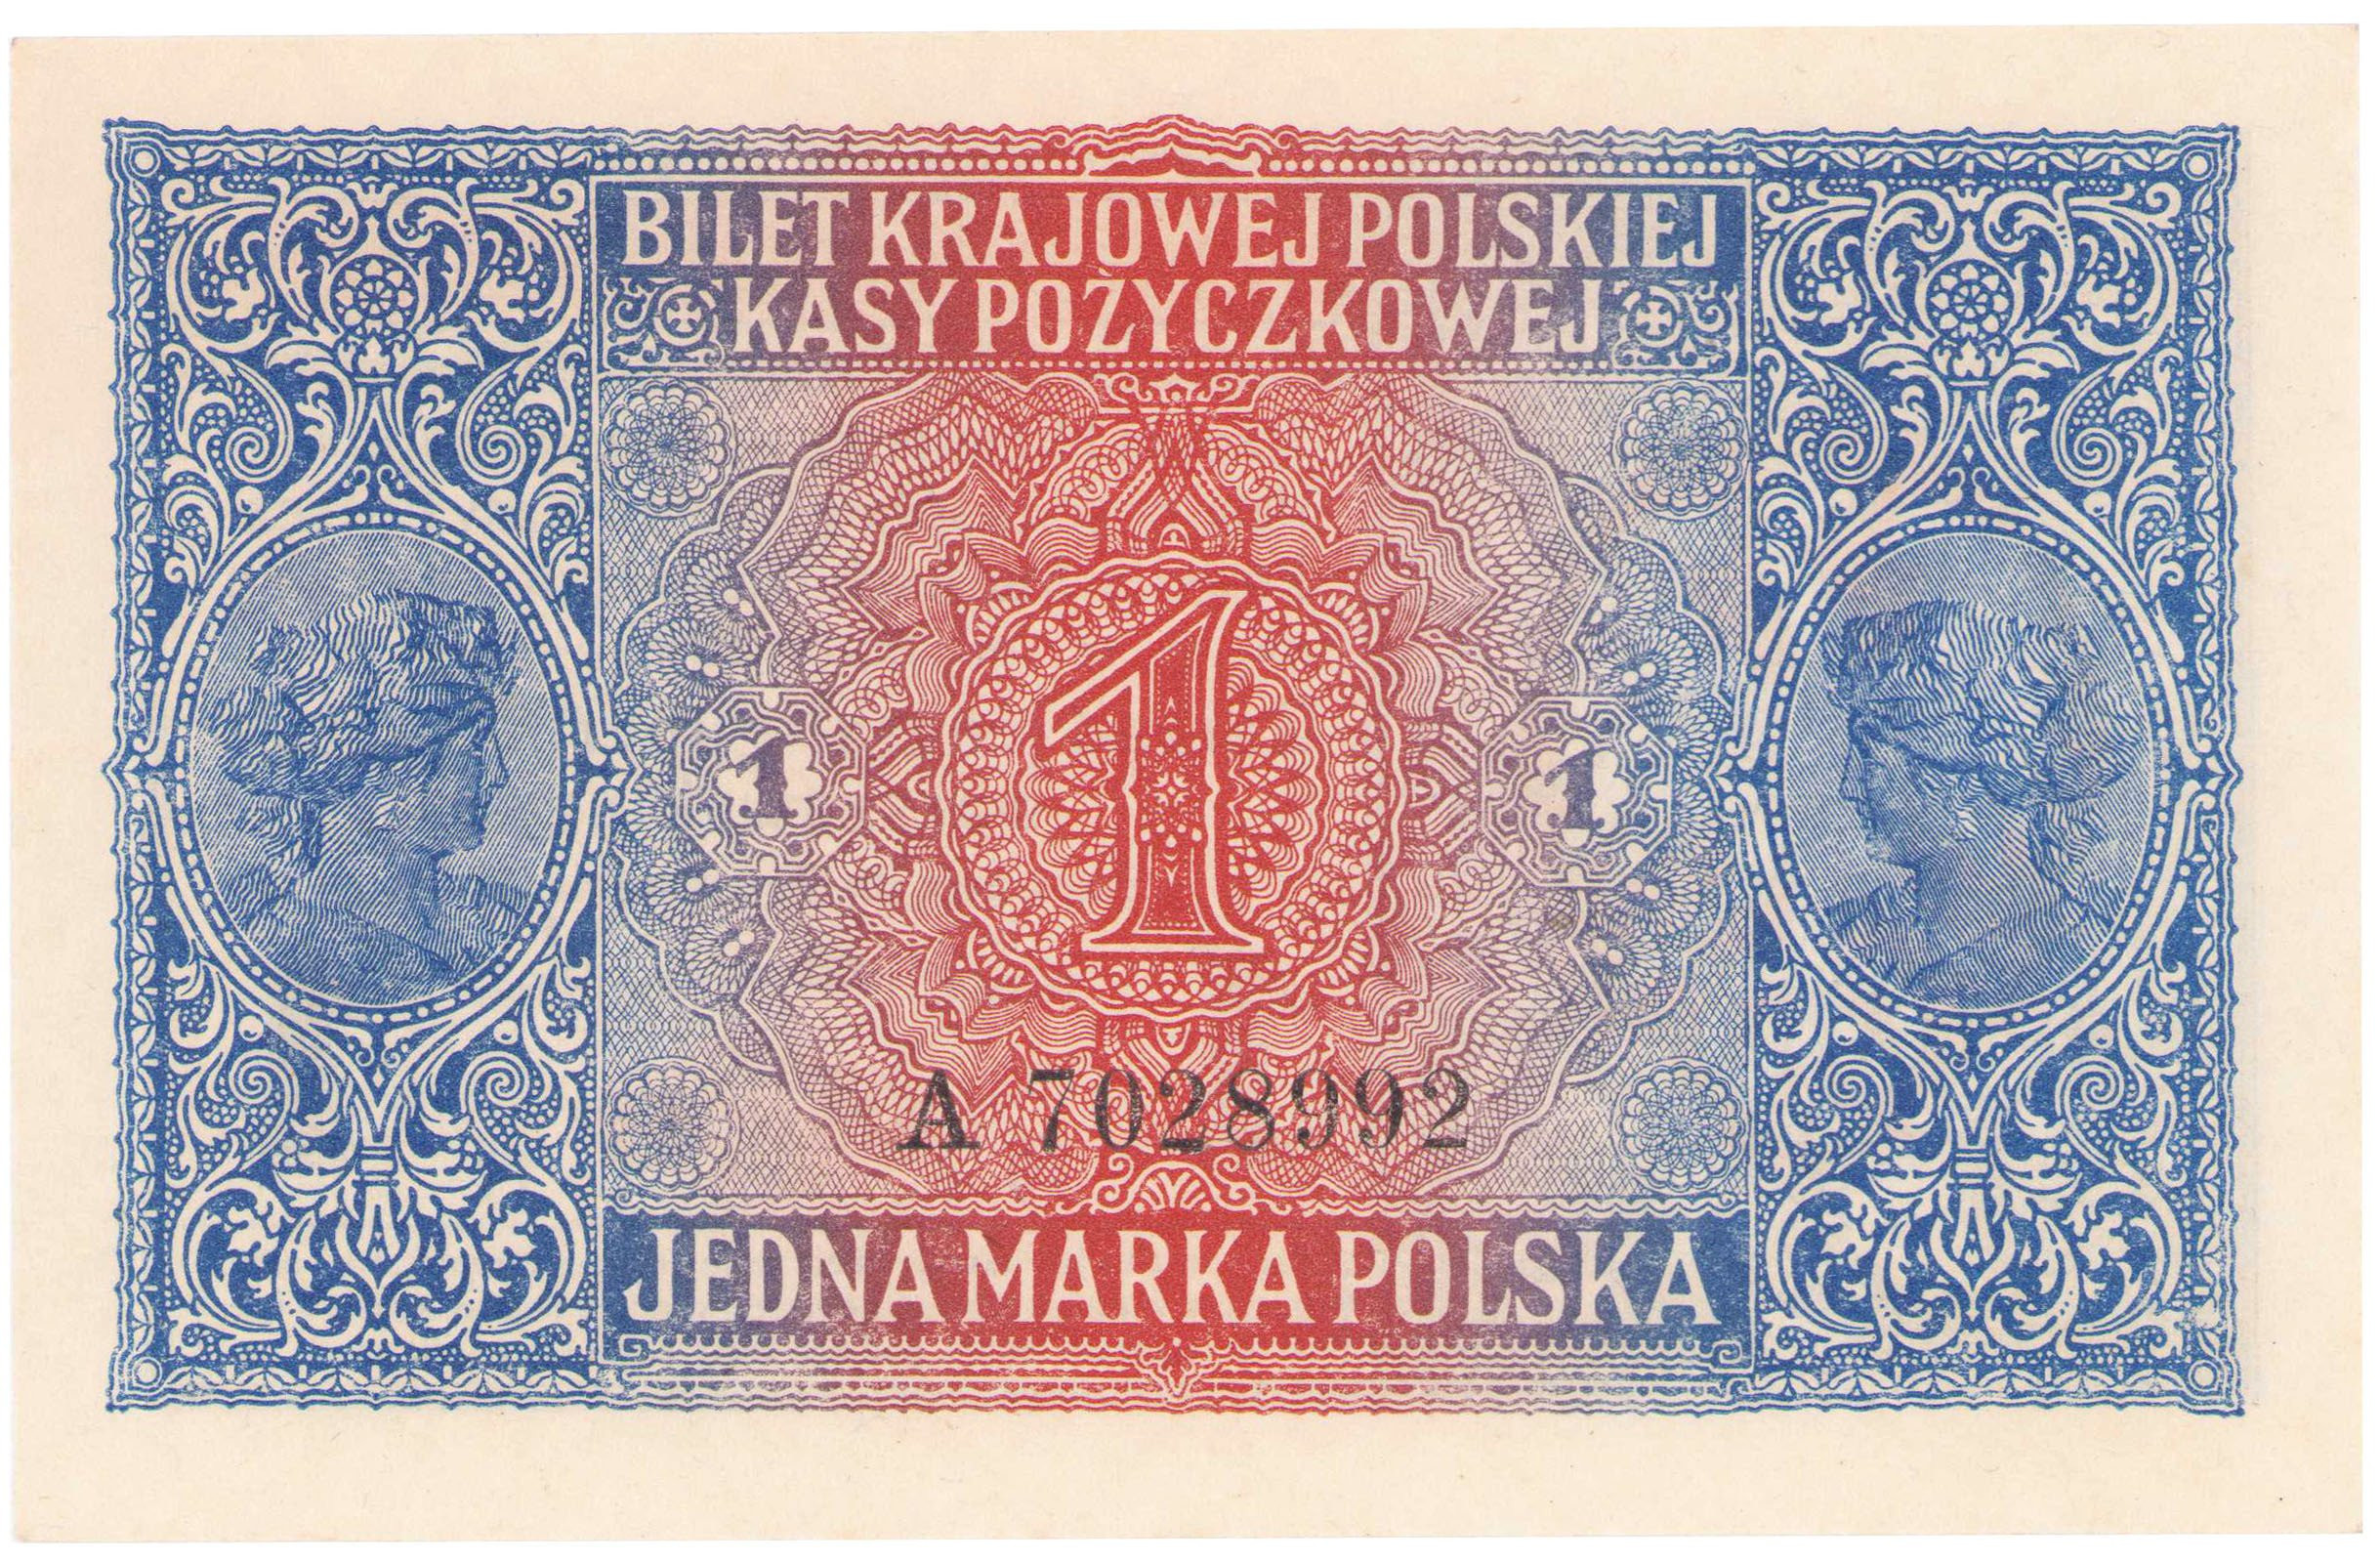 1 marka polska 1916 seria A - jenerał - PIĘKNE